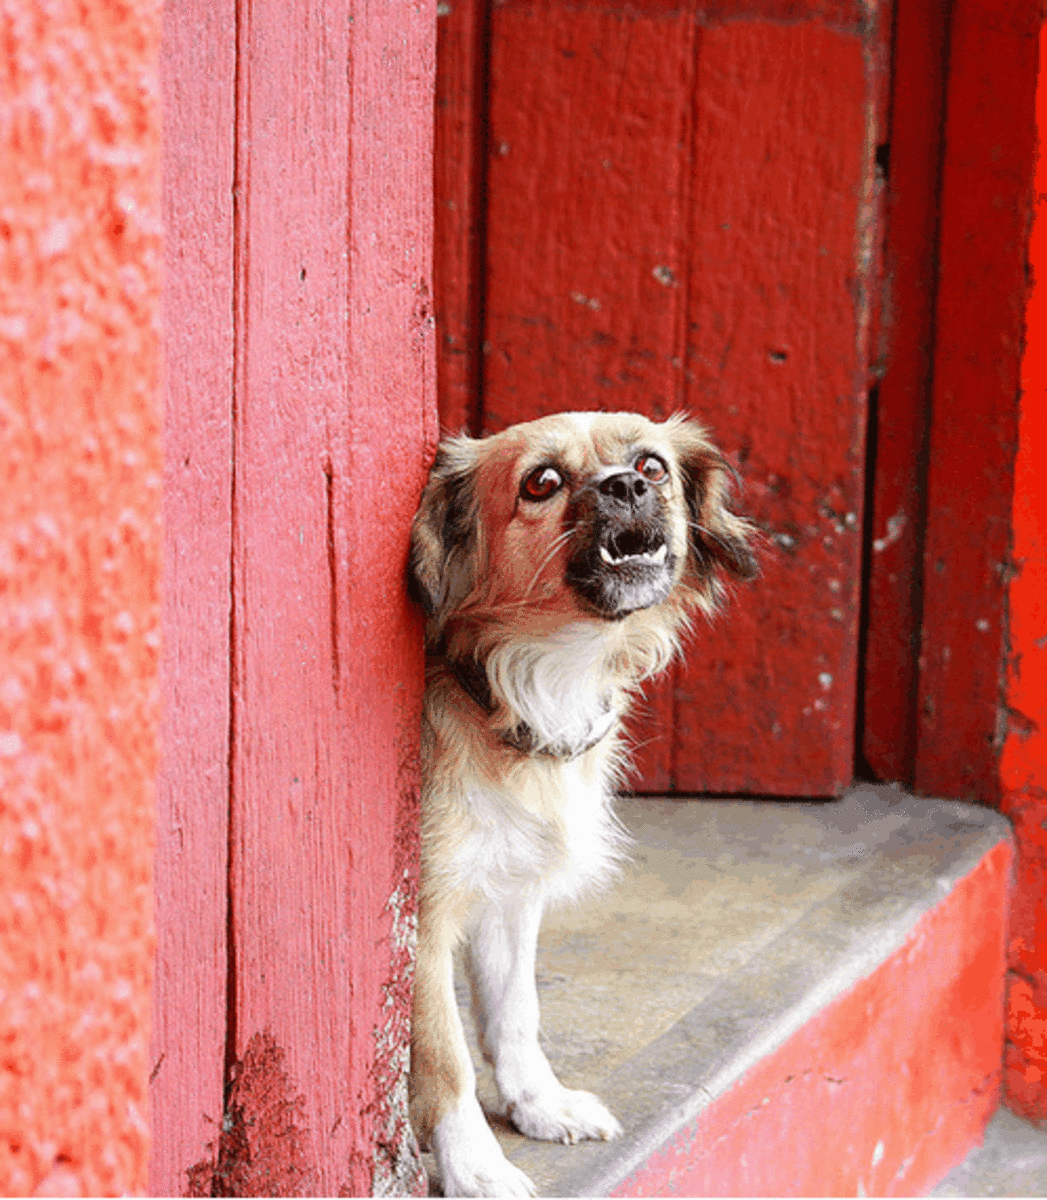 Dog reactive towards guests, doorbells, and knocking